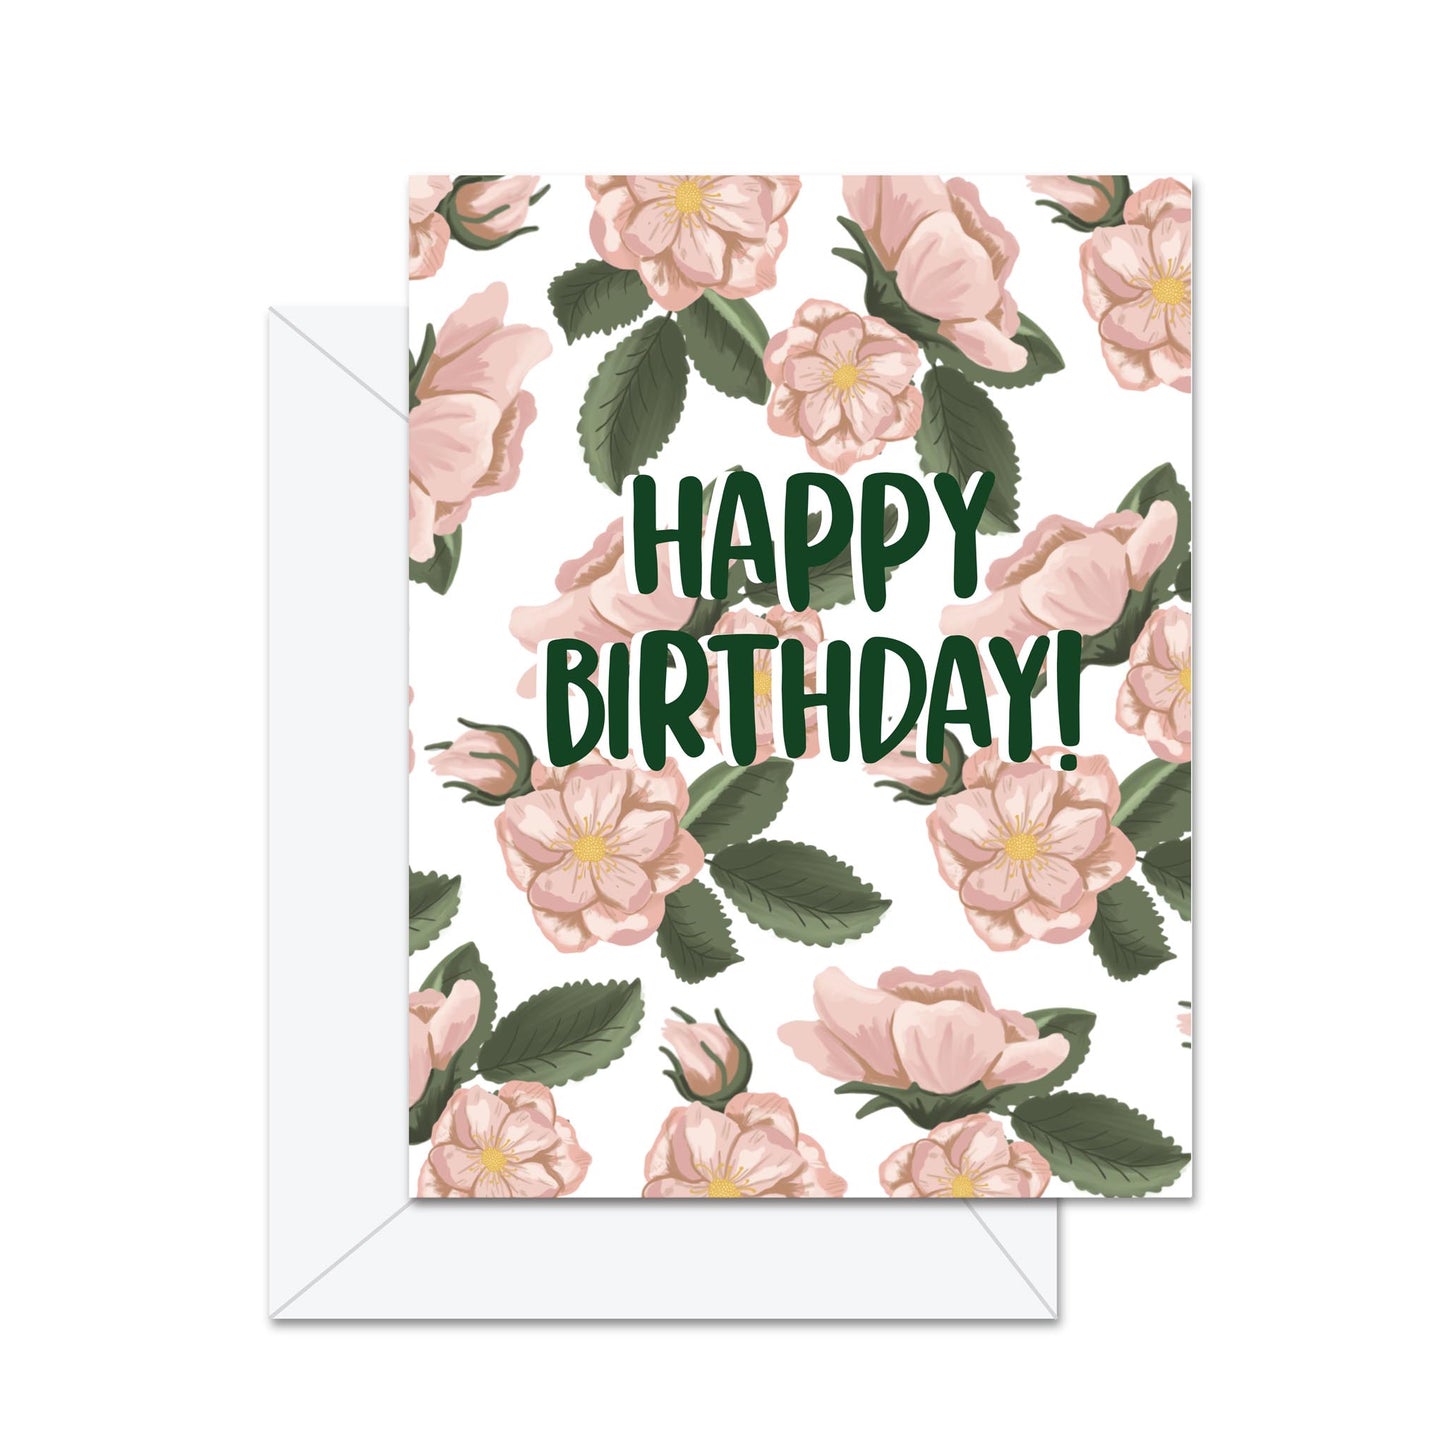 Happy Birthday! (Wildrose) Greeting Card